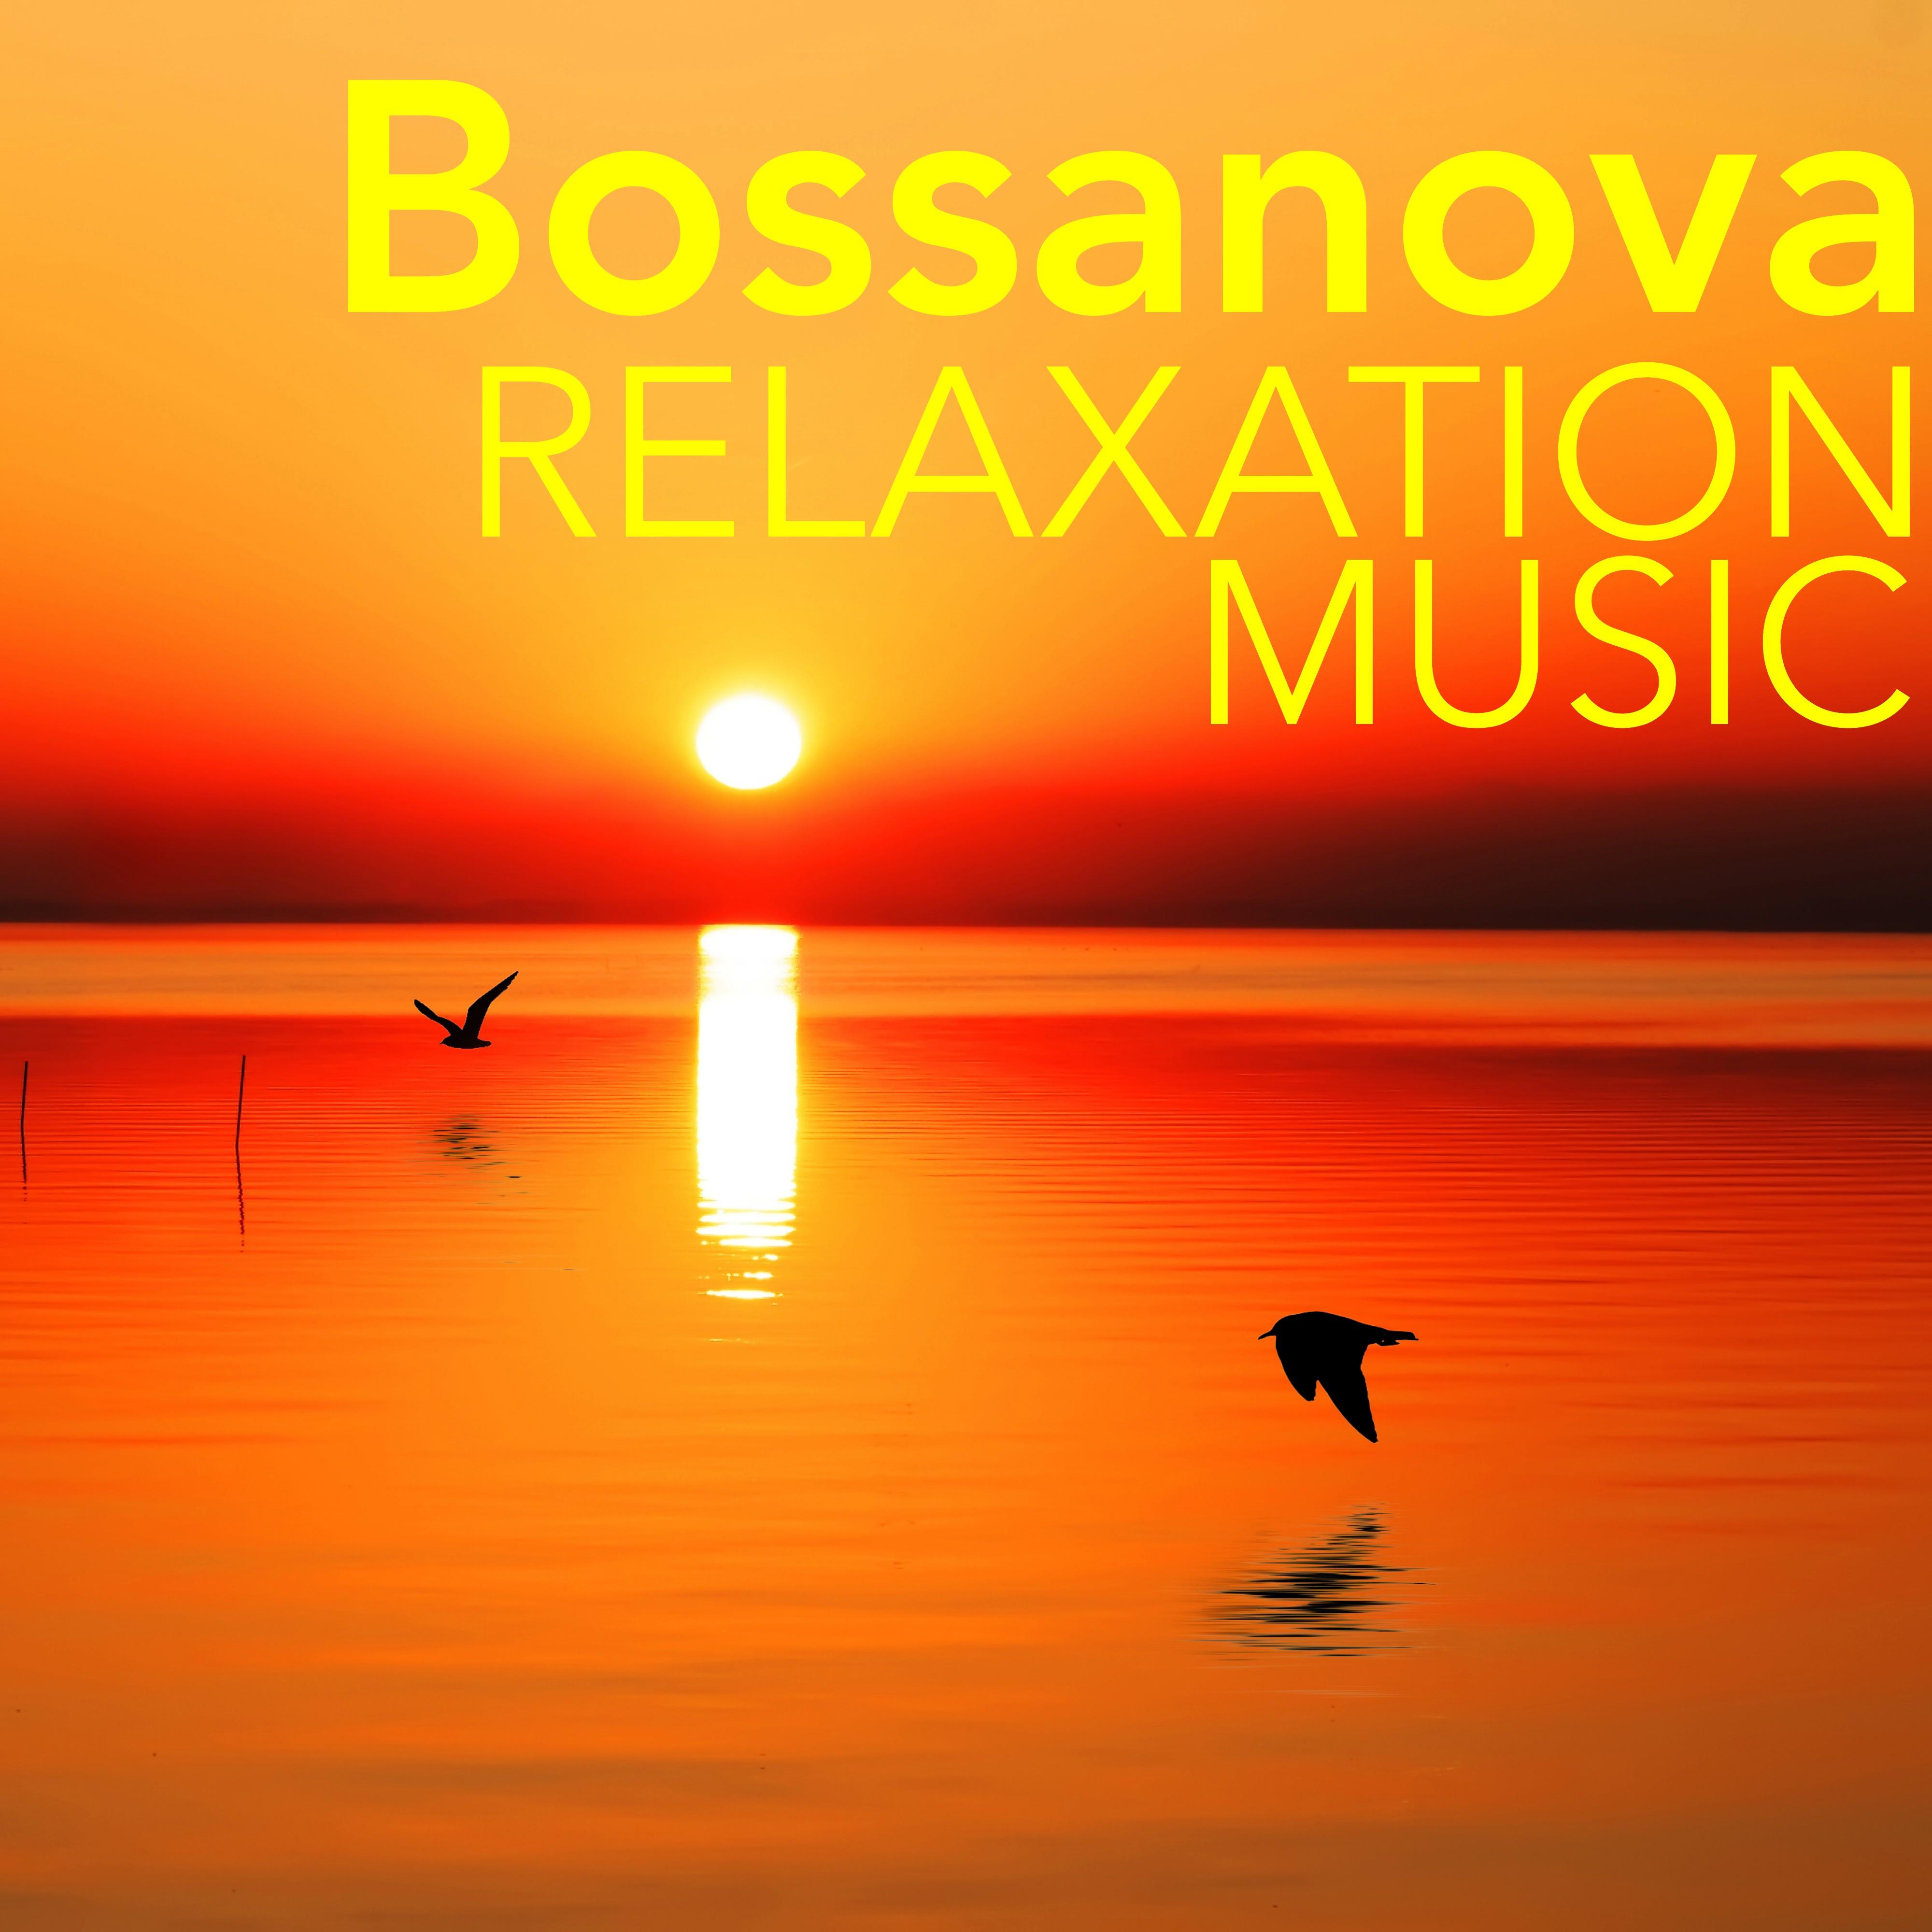 Bossanova Relaxation Music - Instrumental Jazz & Lounge Music for Waiting Room & Elevator Background